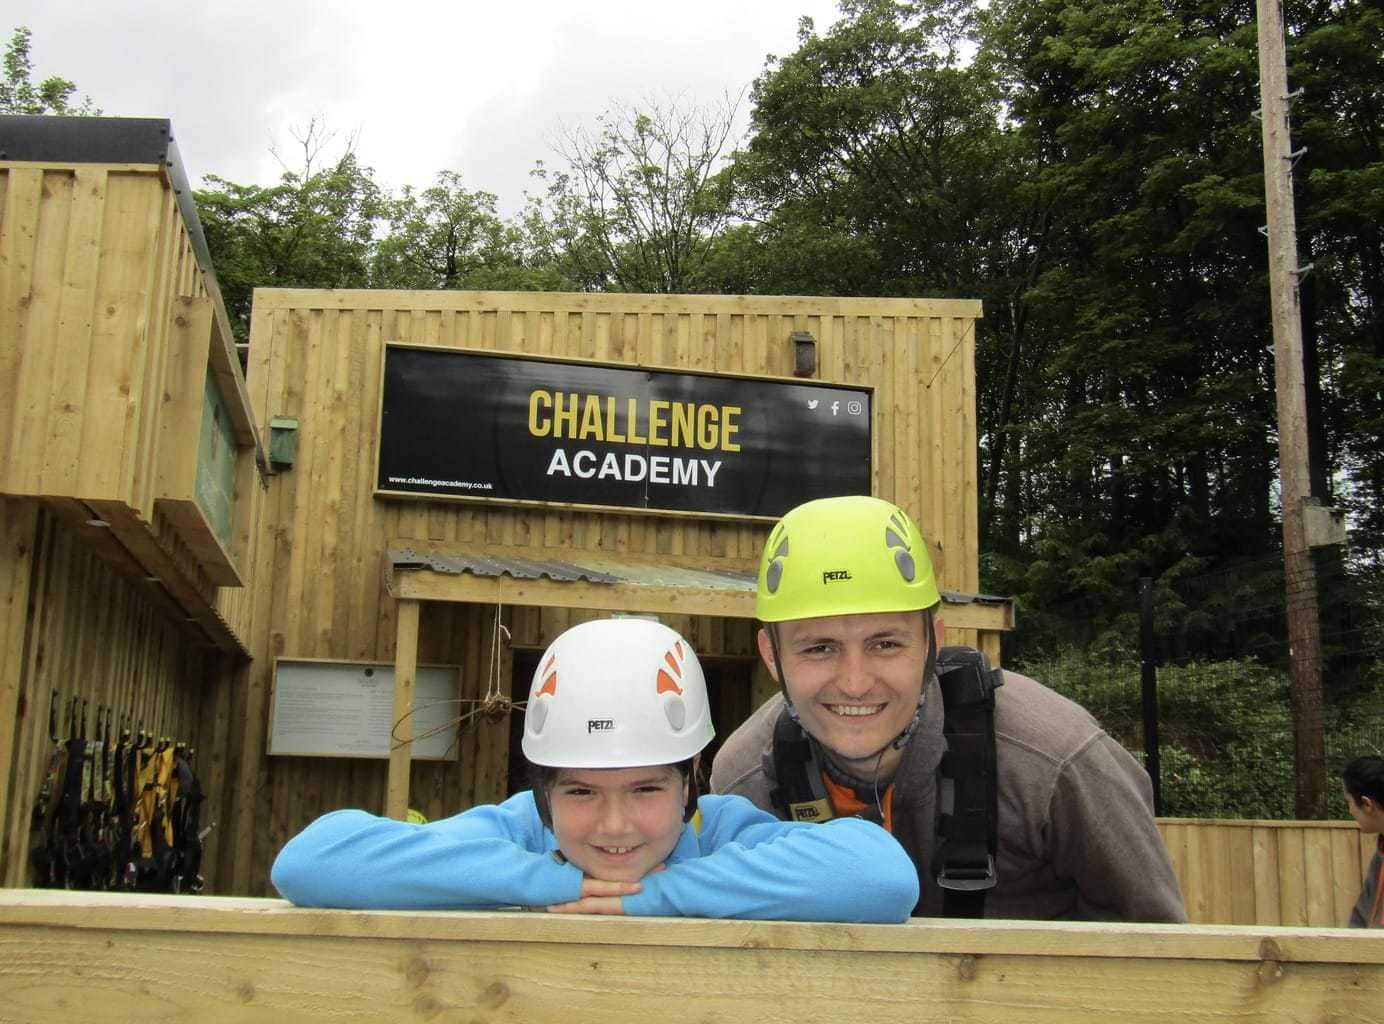 Challenge Academy in Baggeridge Country Park